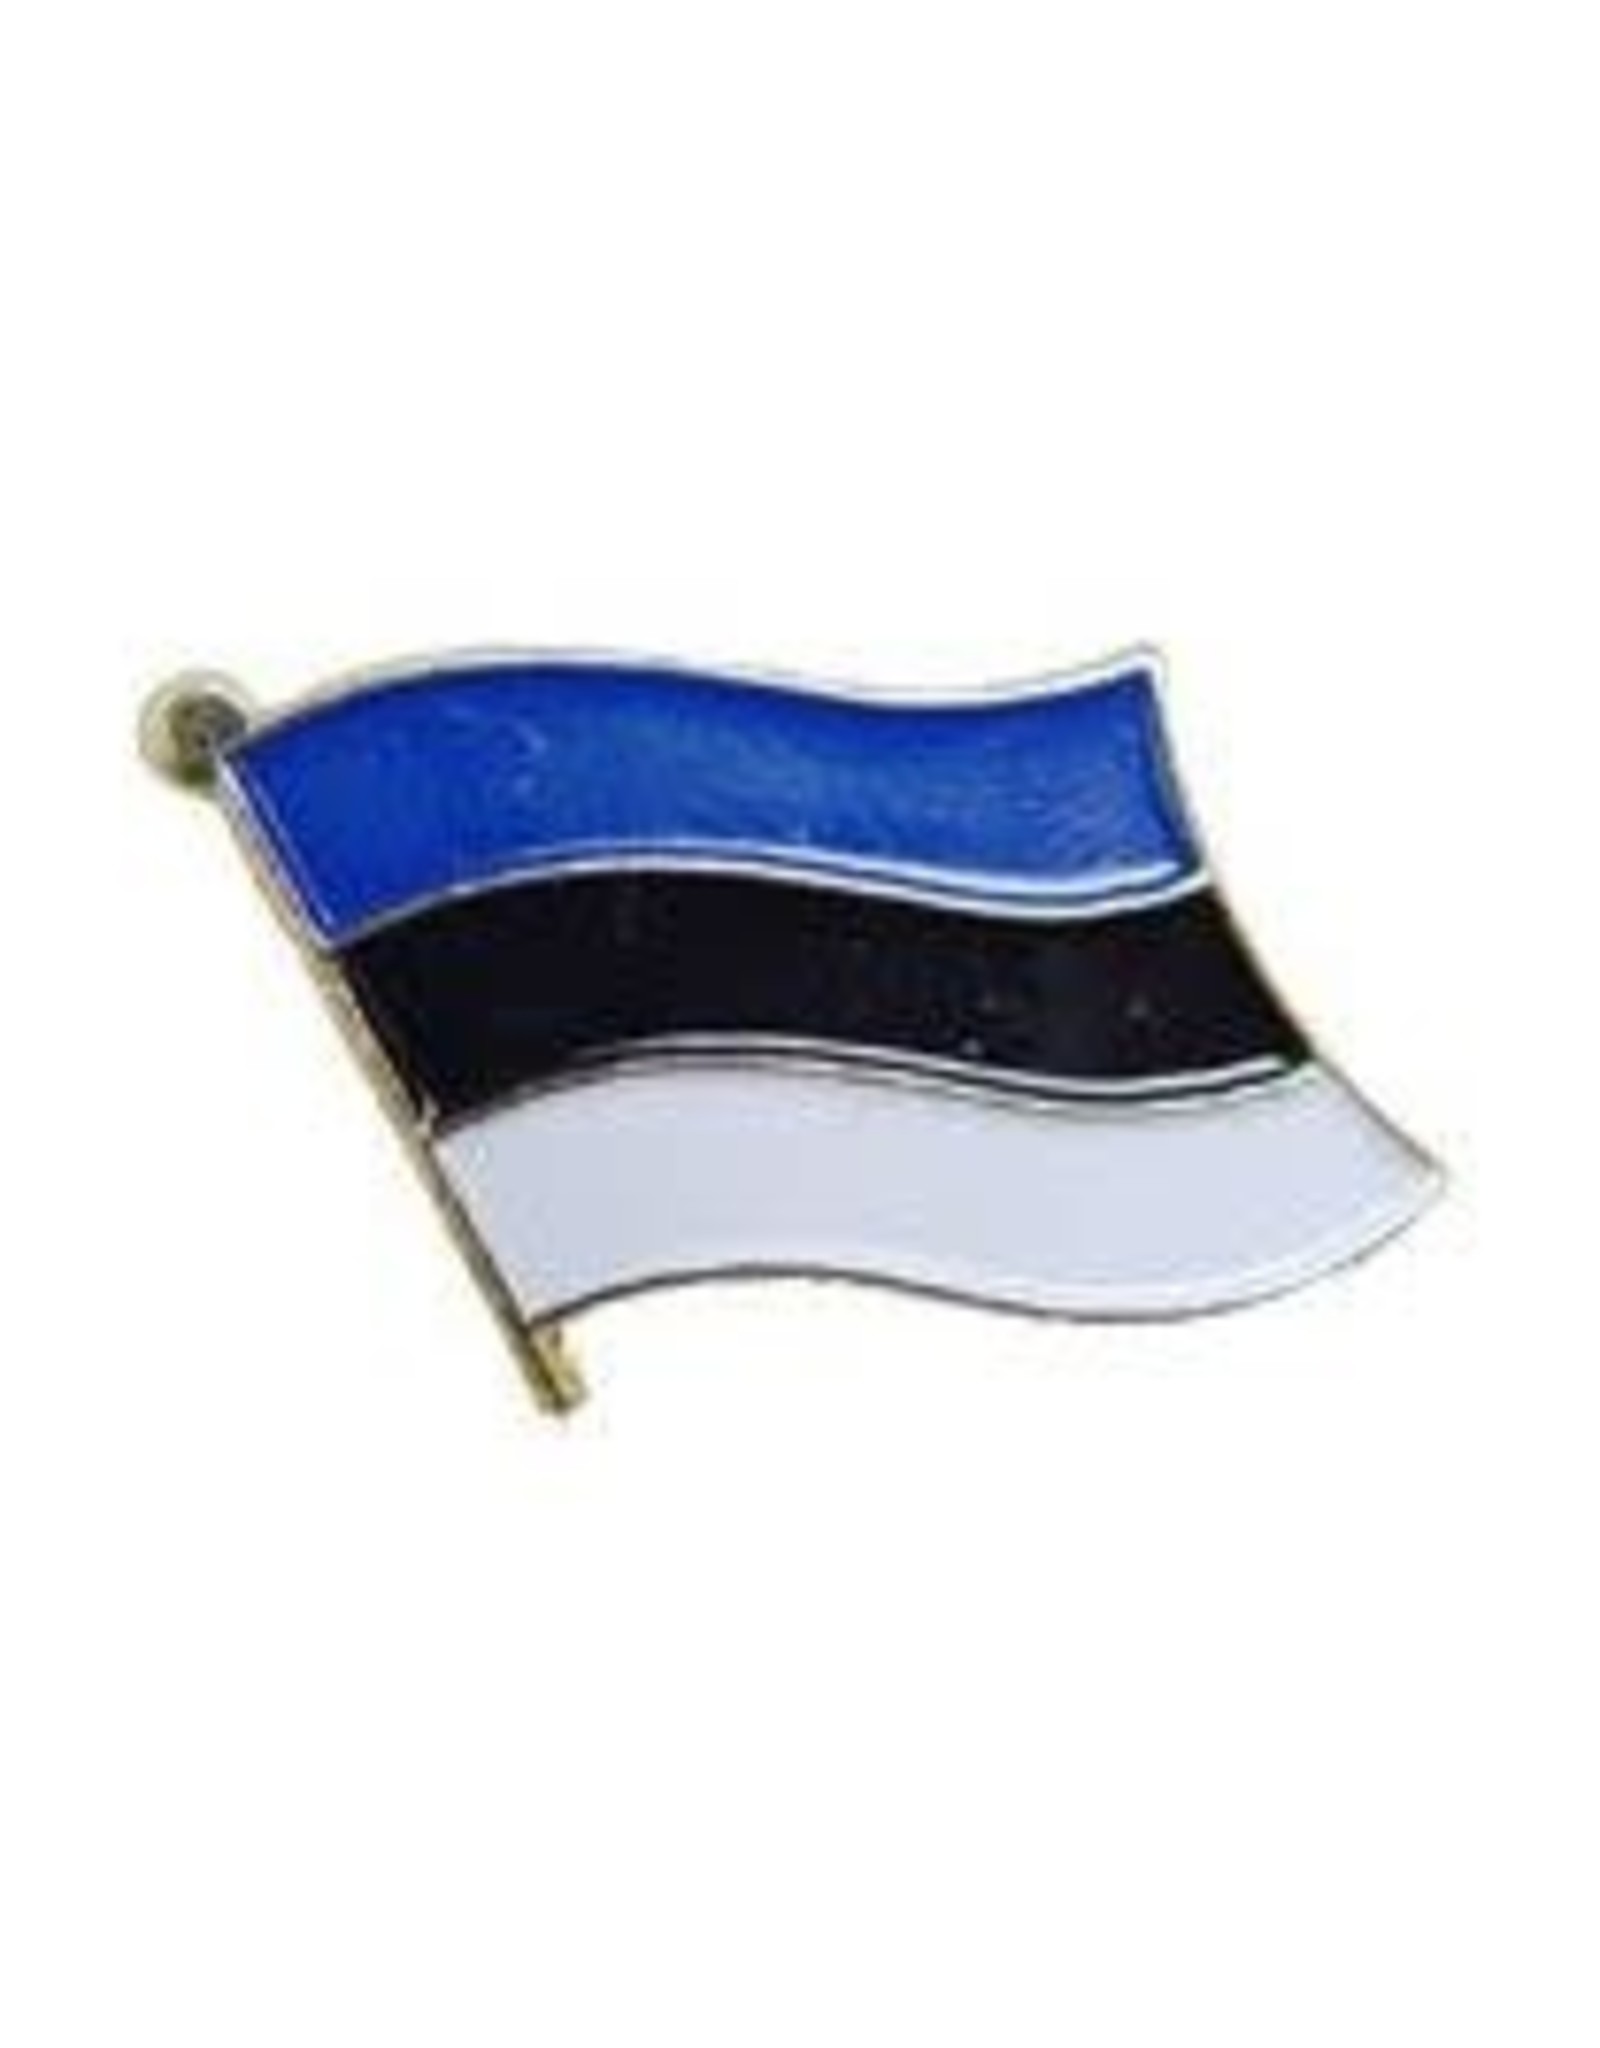 Pin - Estonia Flag